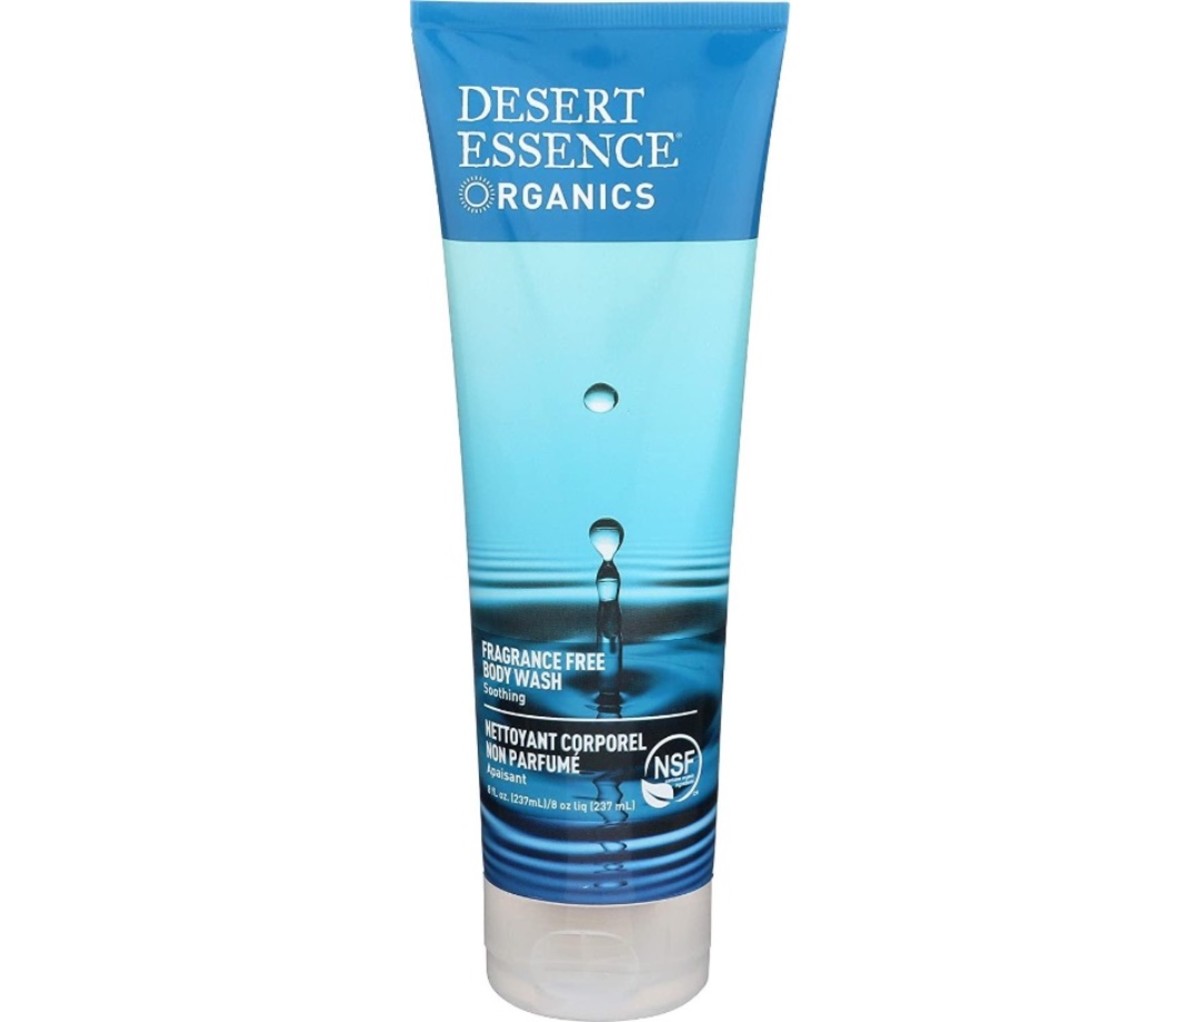 Desert Essence Organics’ Fragrance-Free Body Wash